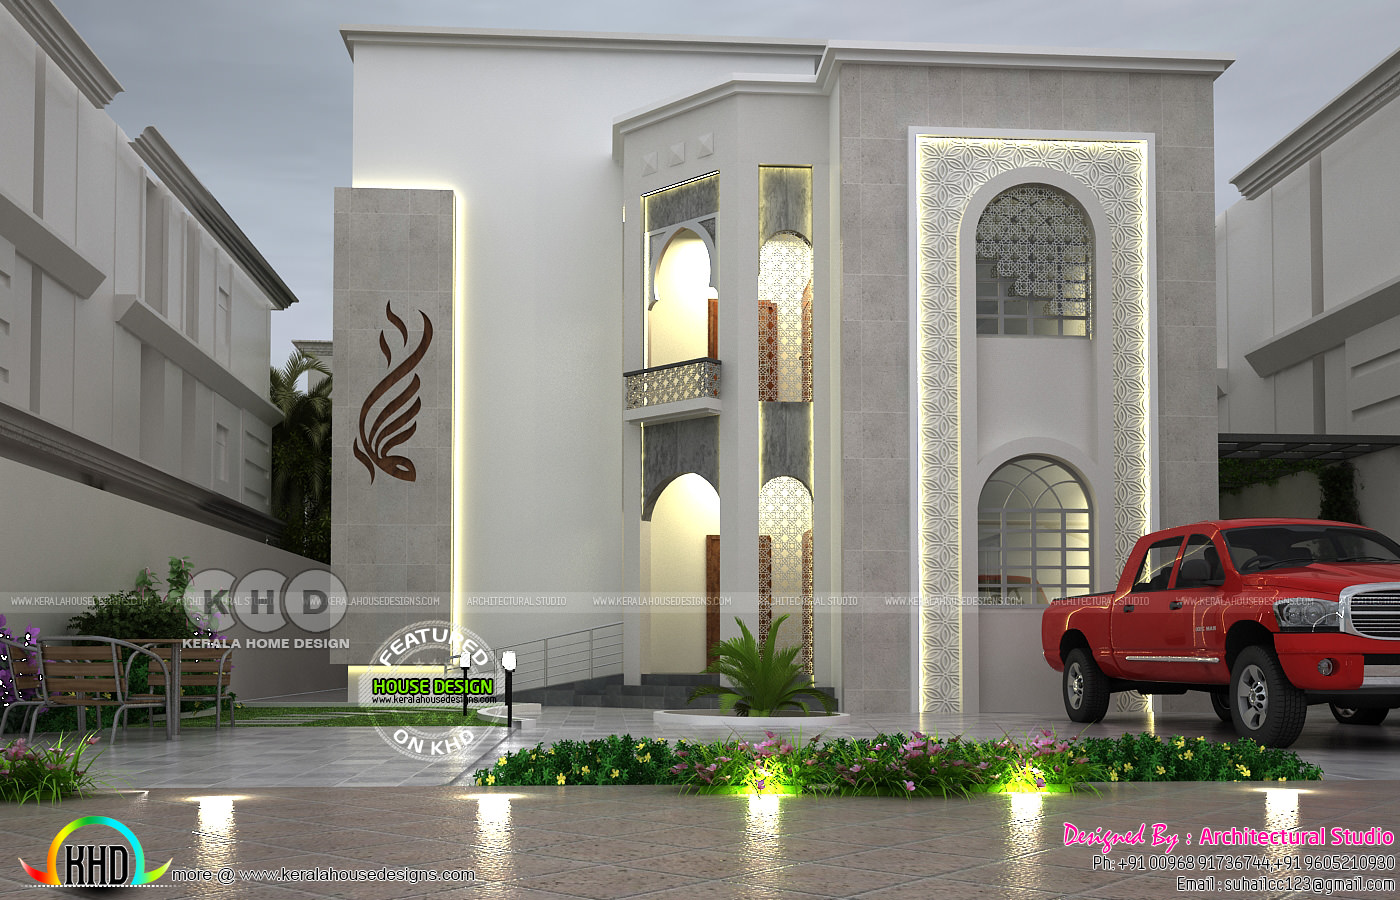 4306 sqft Arabian model house with interiors Kerala home design and